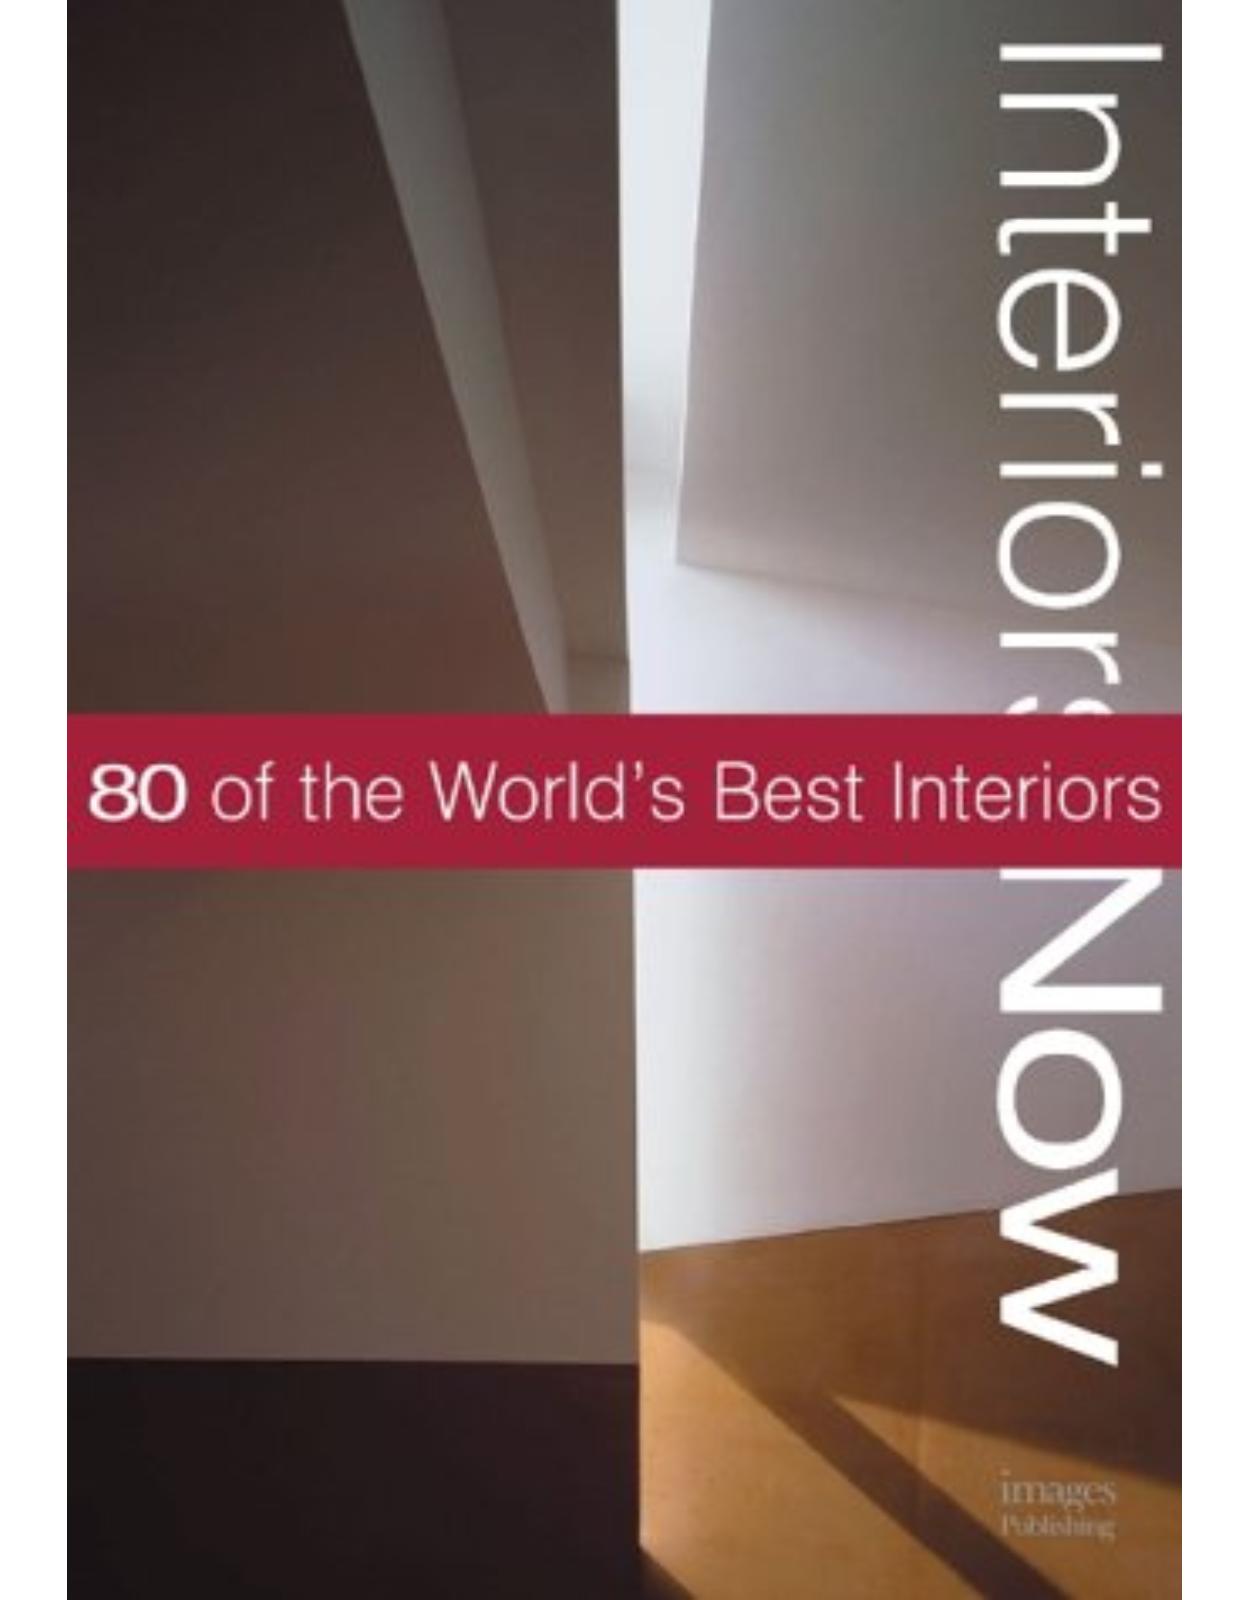 Interiors Now: 80 of the World's Best Interiors